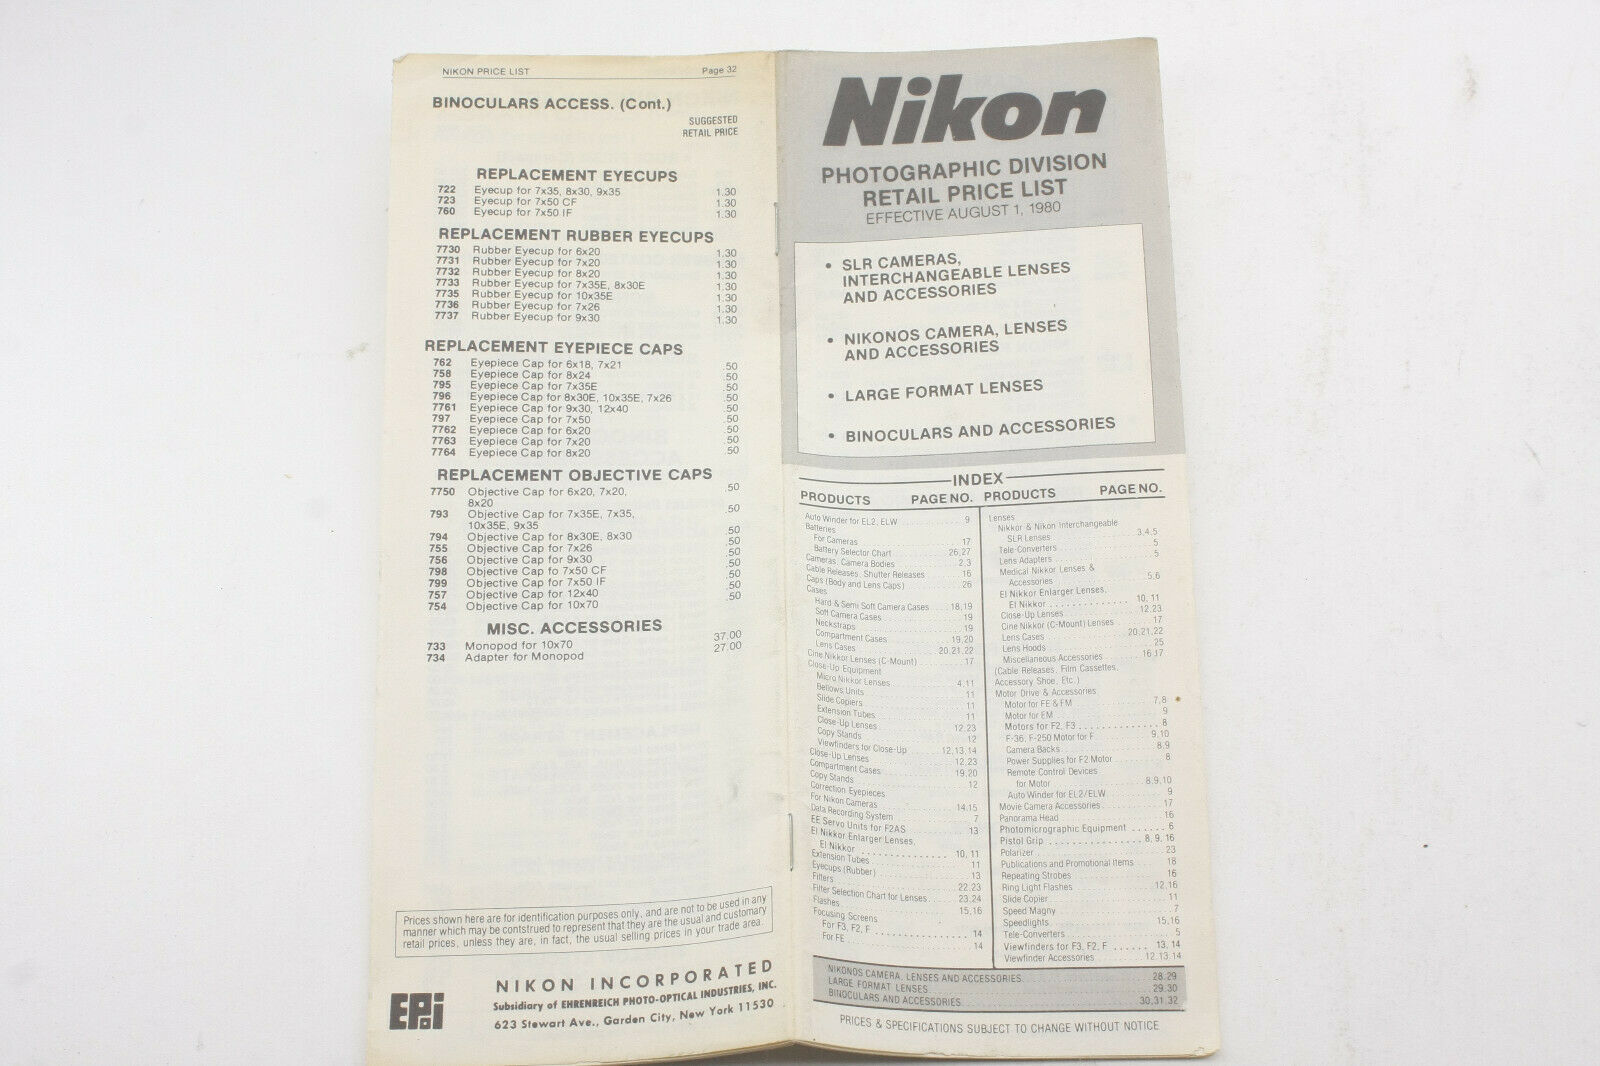 Nikon Photo Retail Price List Aug 1980 Slr Nikonos Guide - English Used B84e